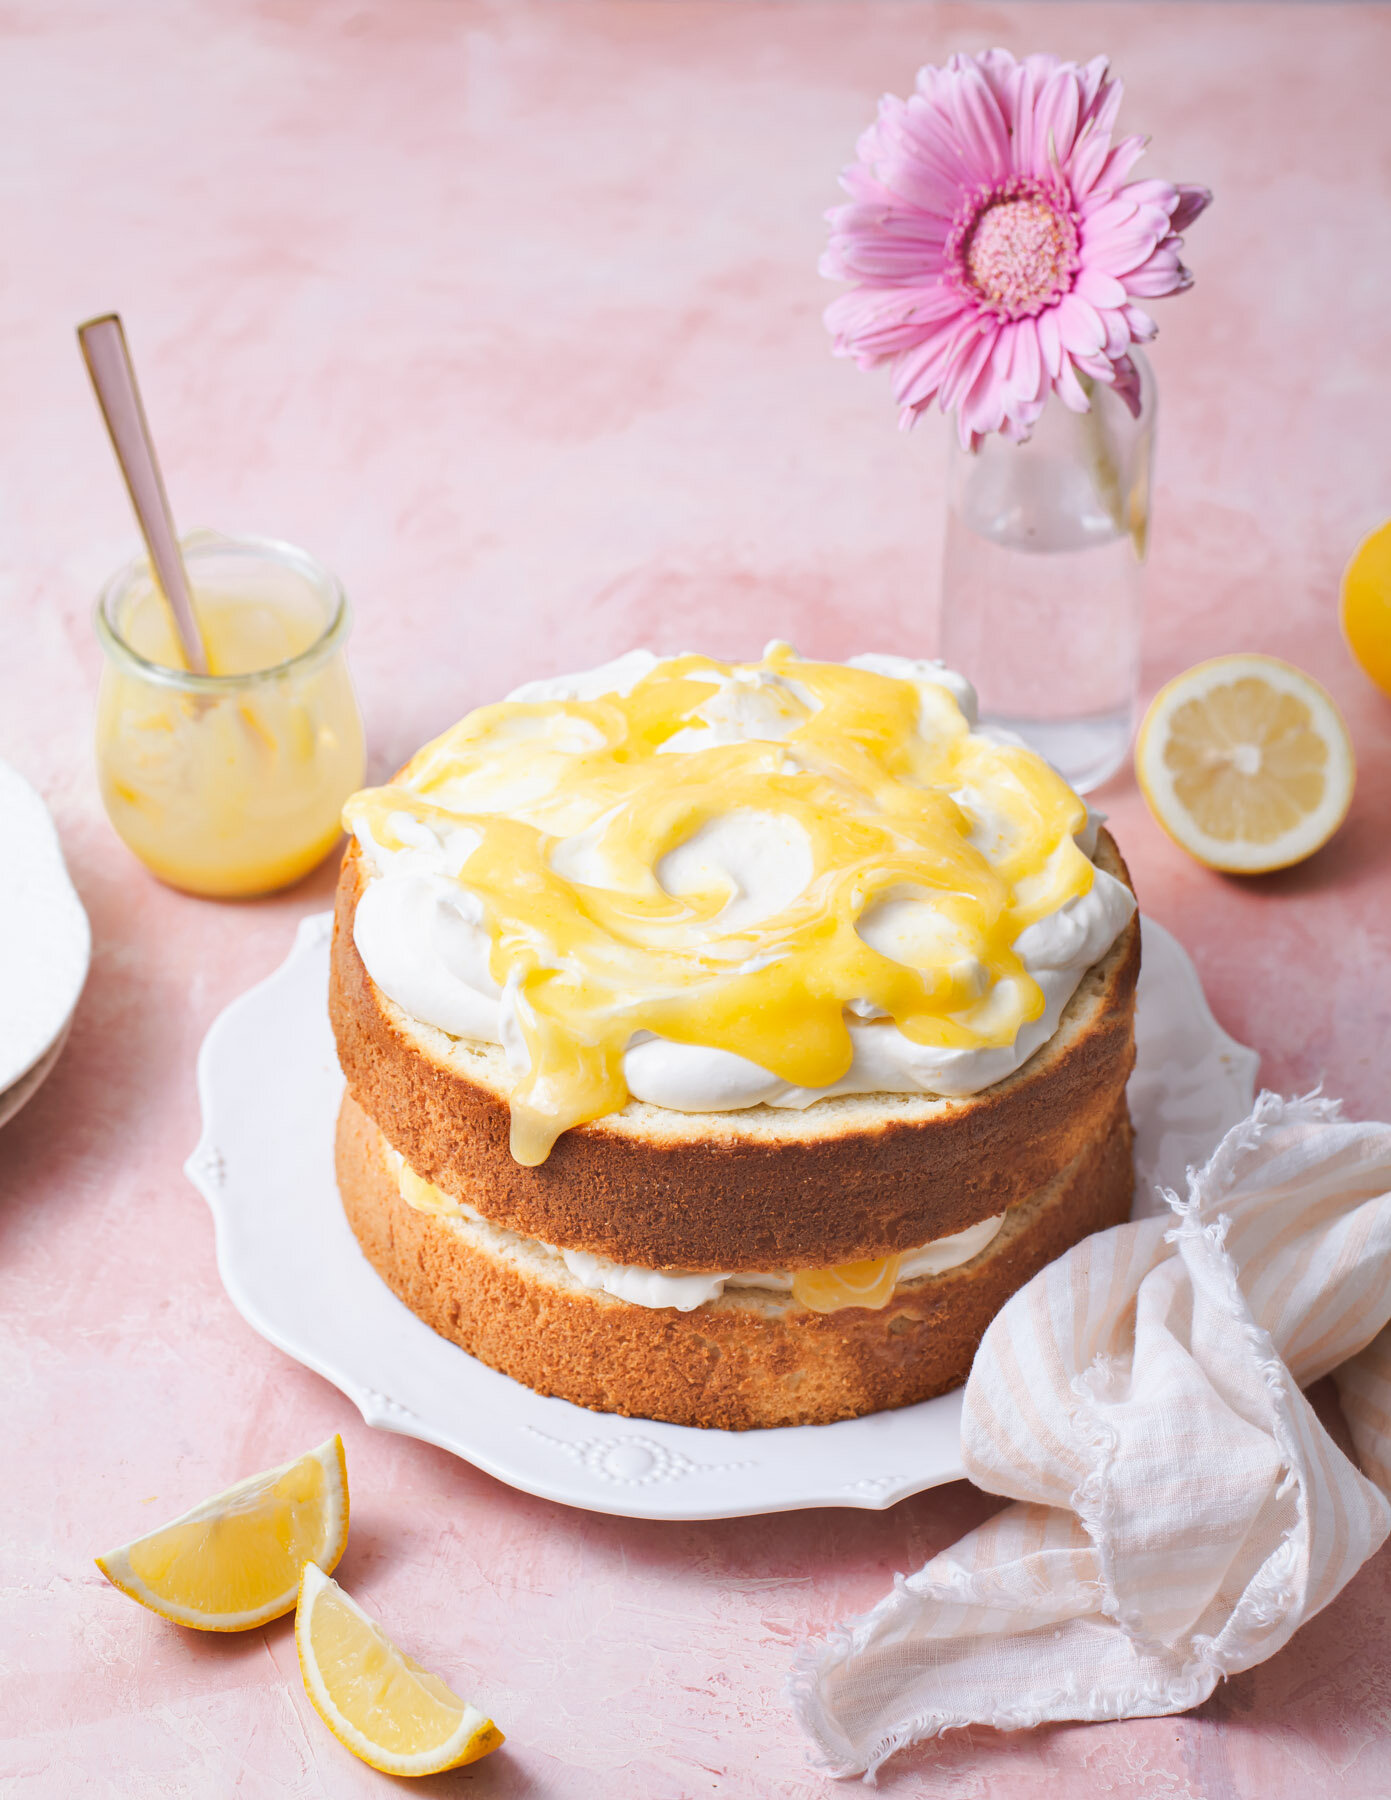 Lemon Chiffon Cake with lemon curd and mascarpone cream